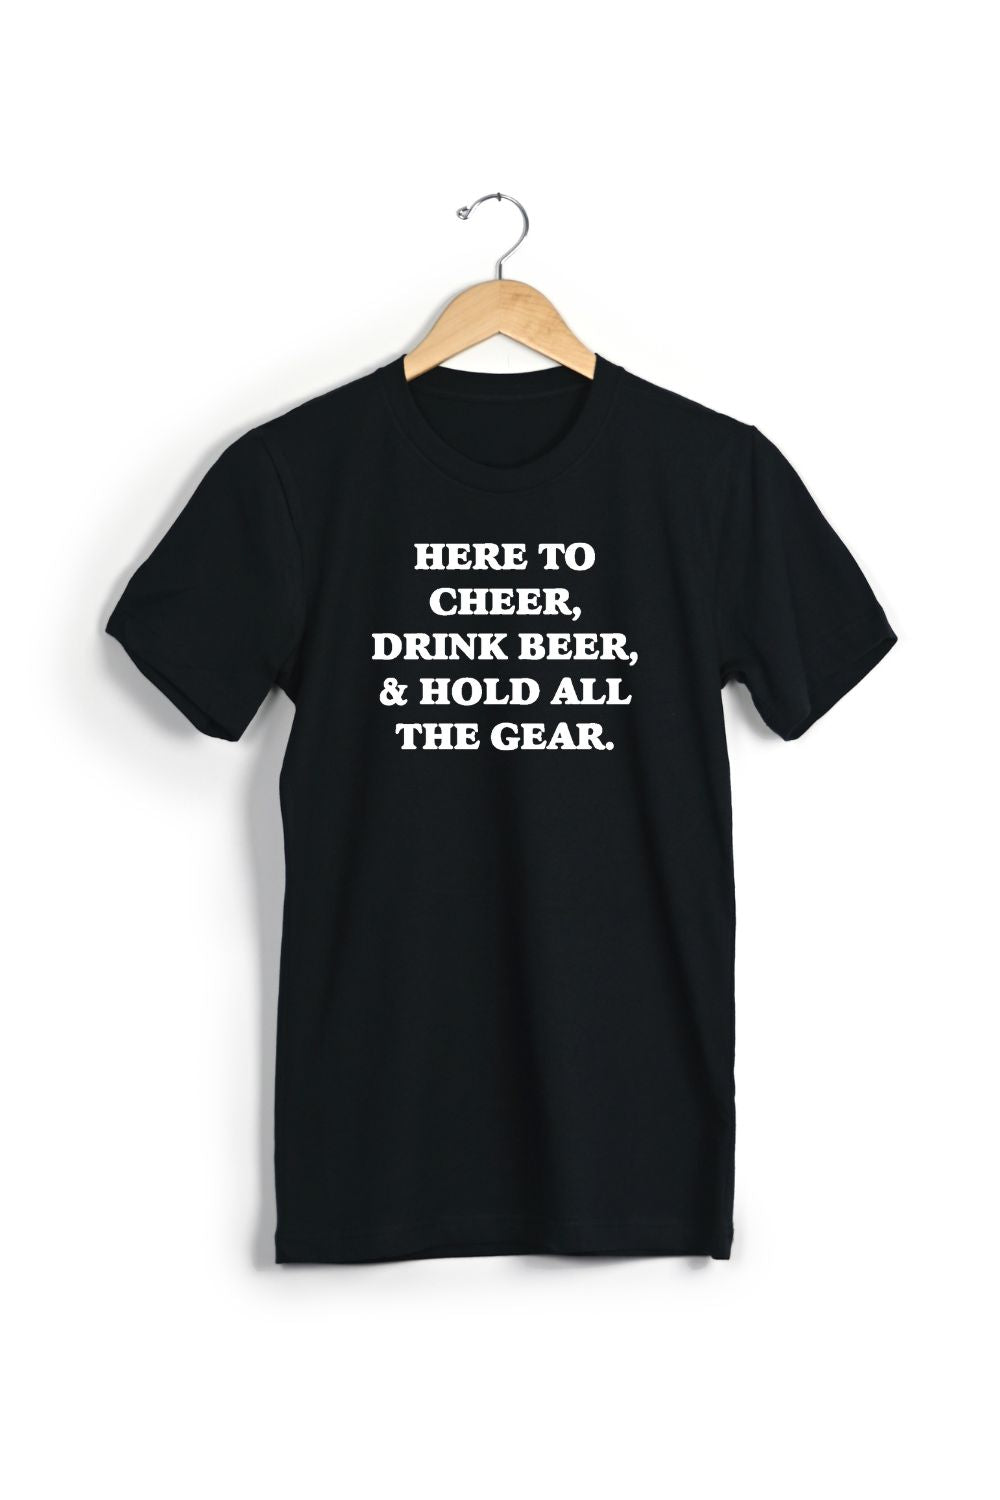 Cheer, Beer, Gear T-Shirt